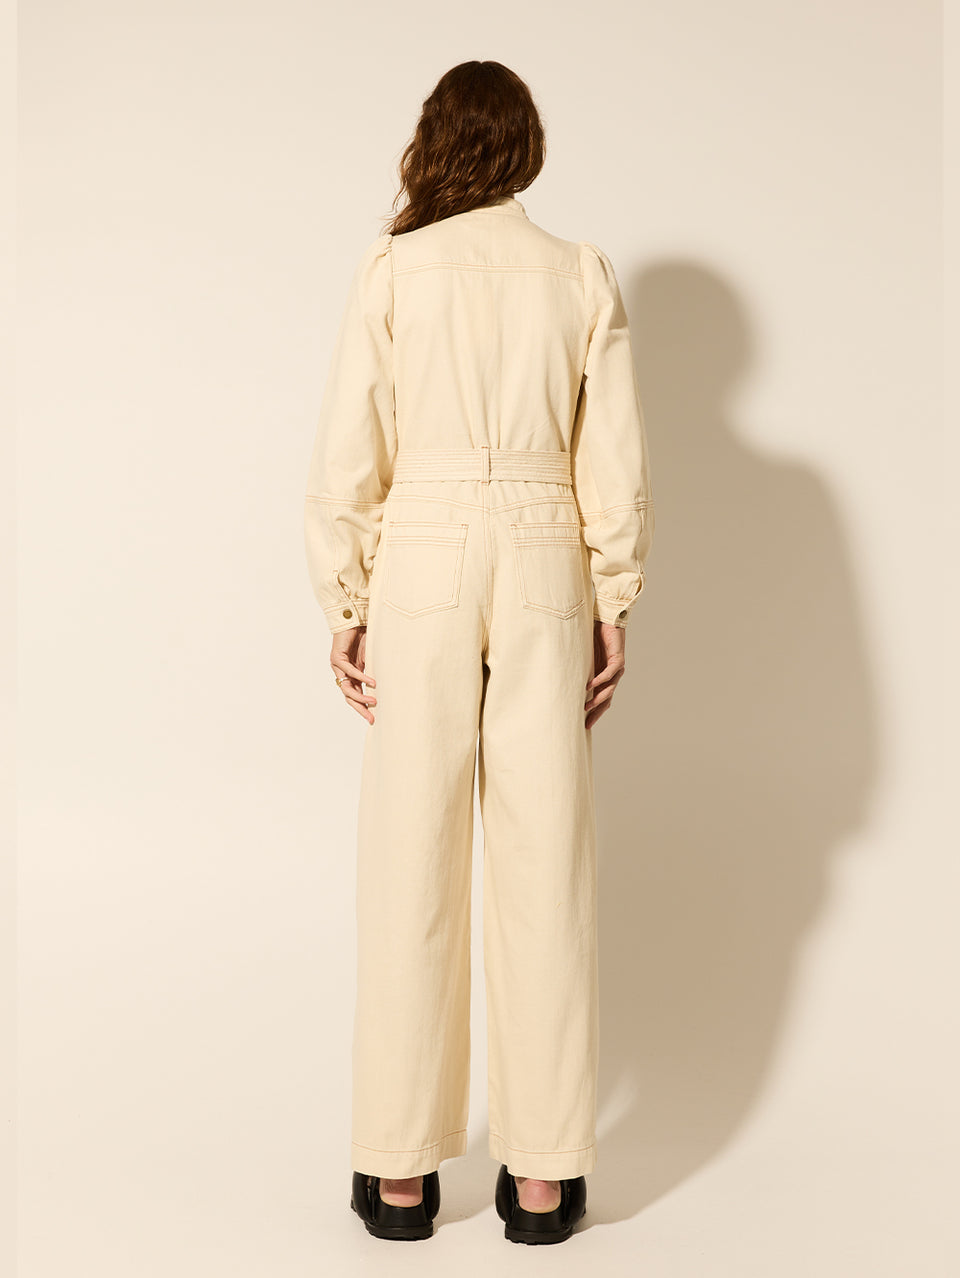 Lourdes Boilersuit Cream | Model wears cream boilersuit back view